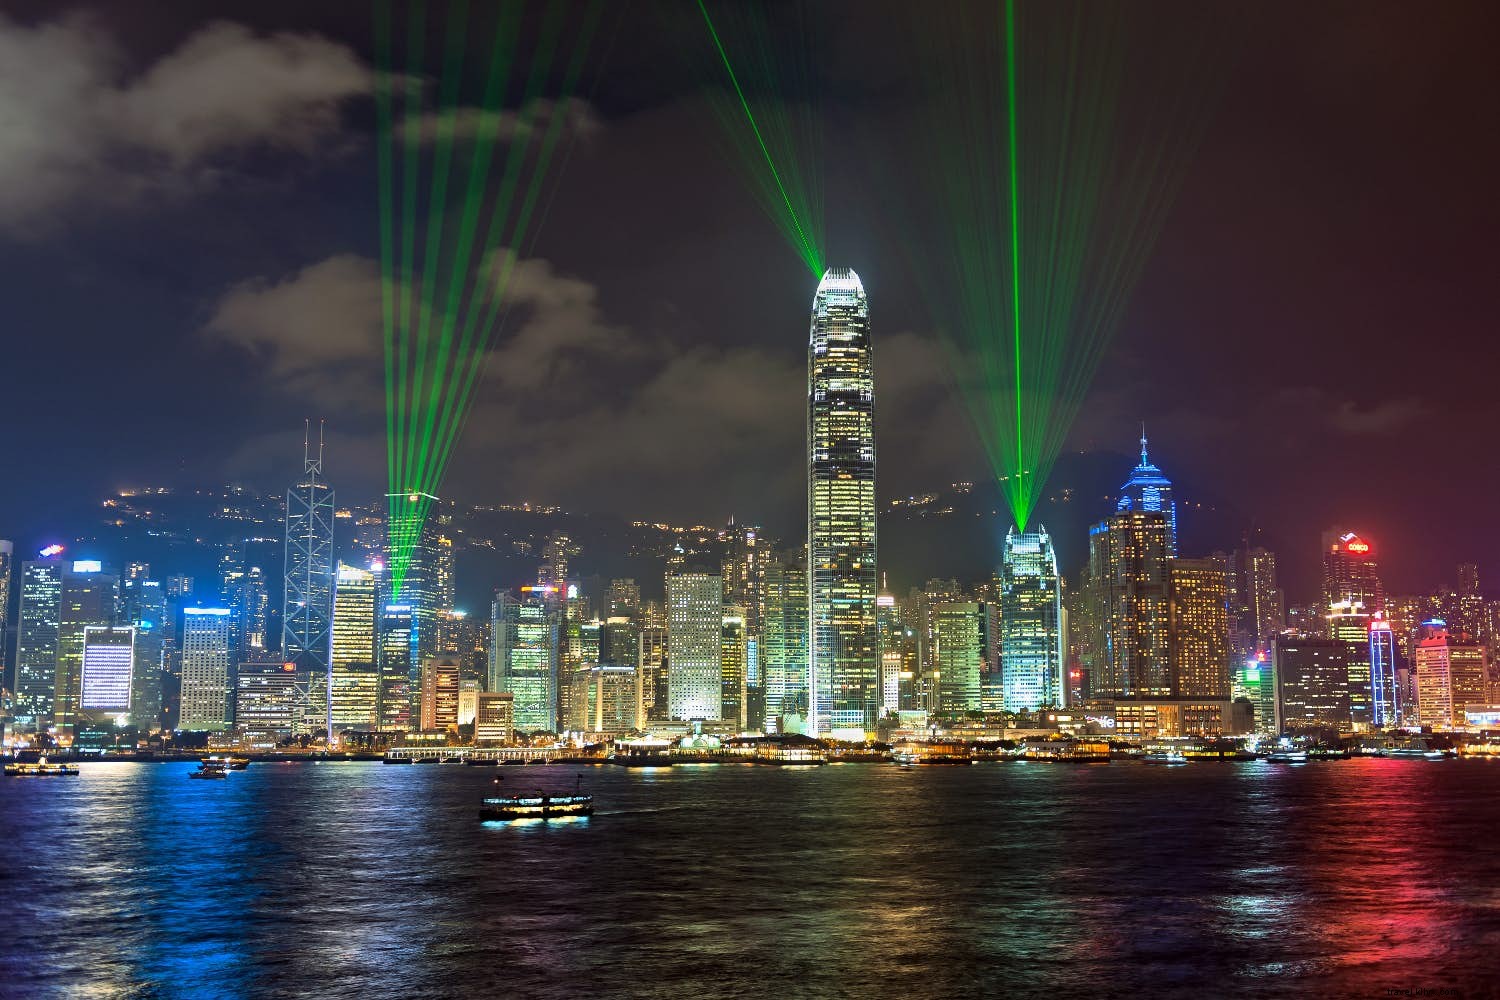 El lado oscuro de Kowloon:Hong Kong peninsular de noche 